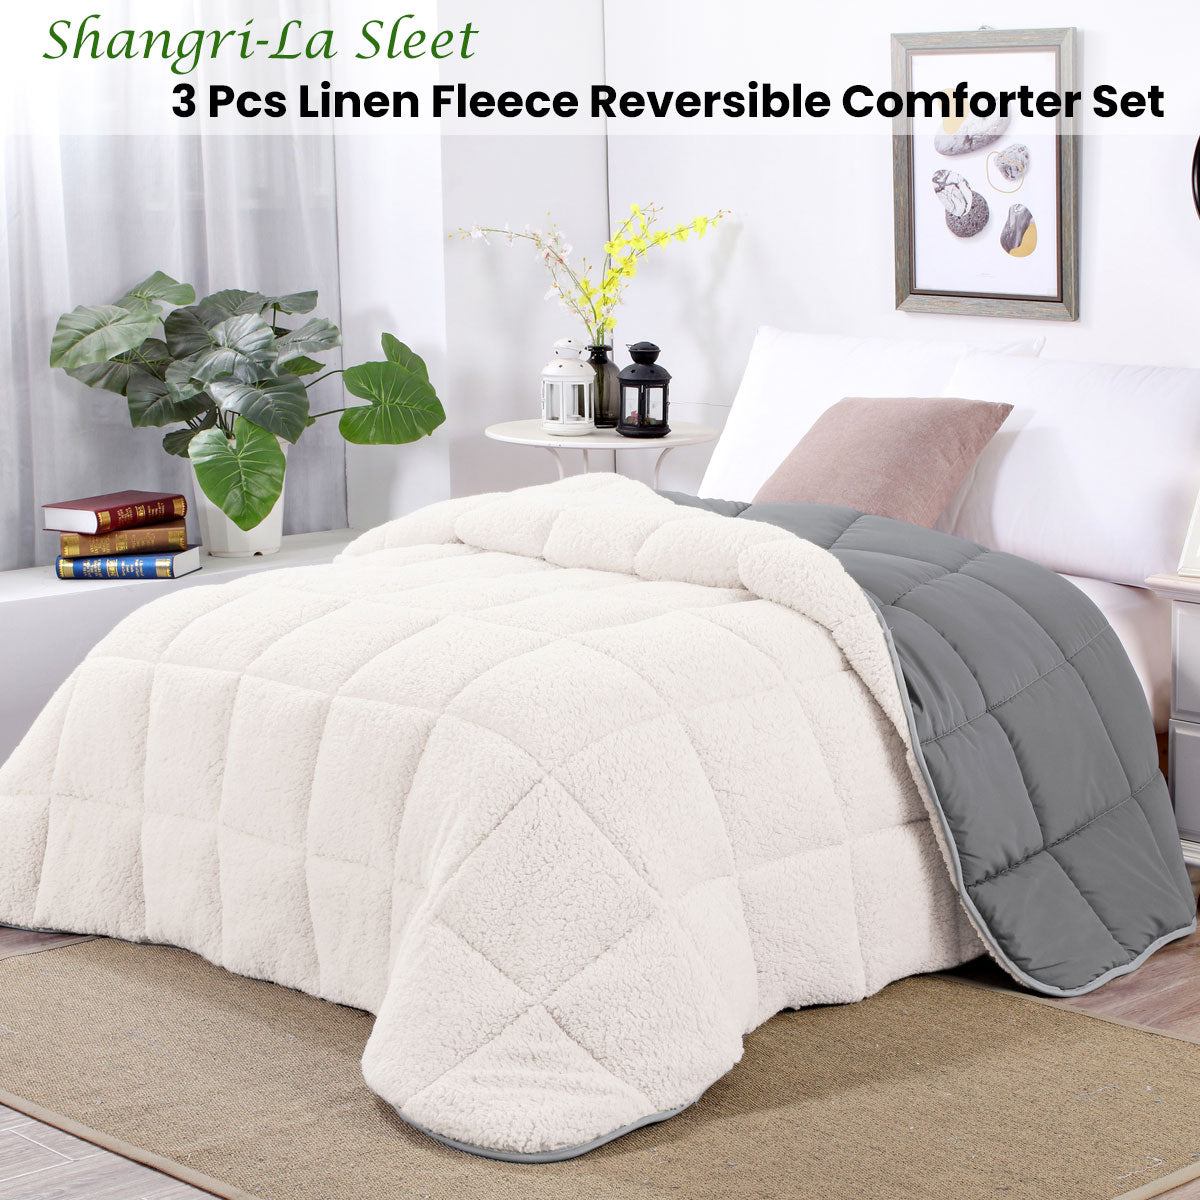 King Shangri La Sleet Sherpa Fleece Reversible 3 Pcs Comforter Set - White/Grey